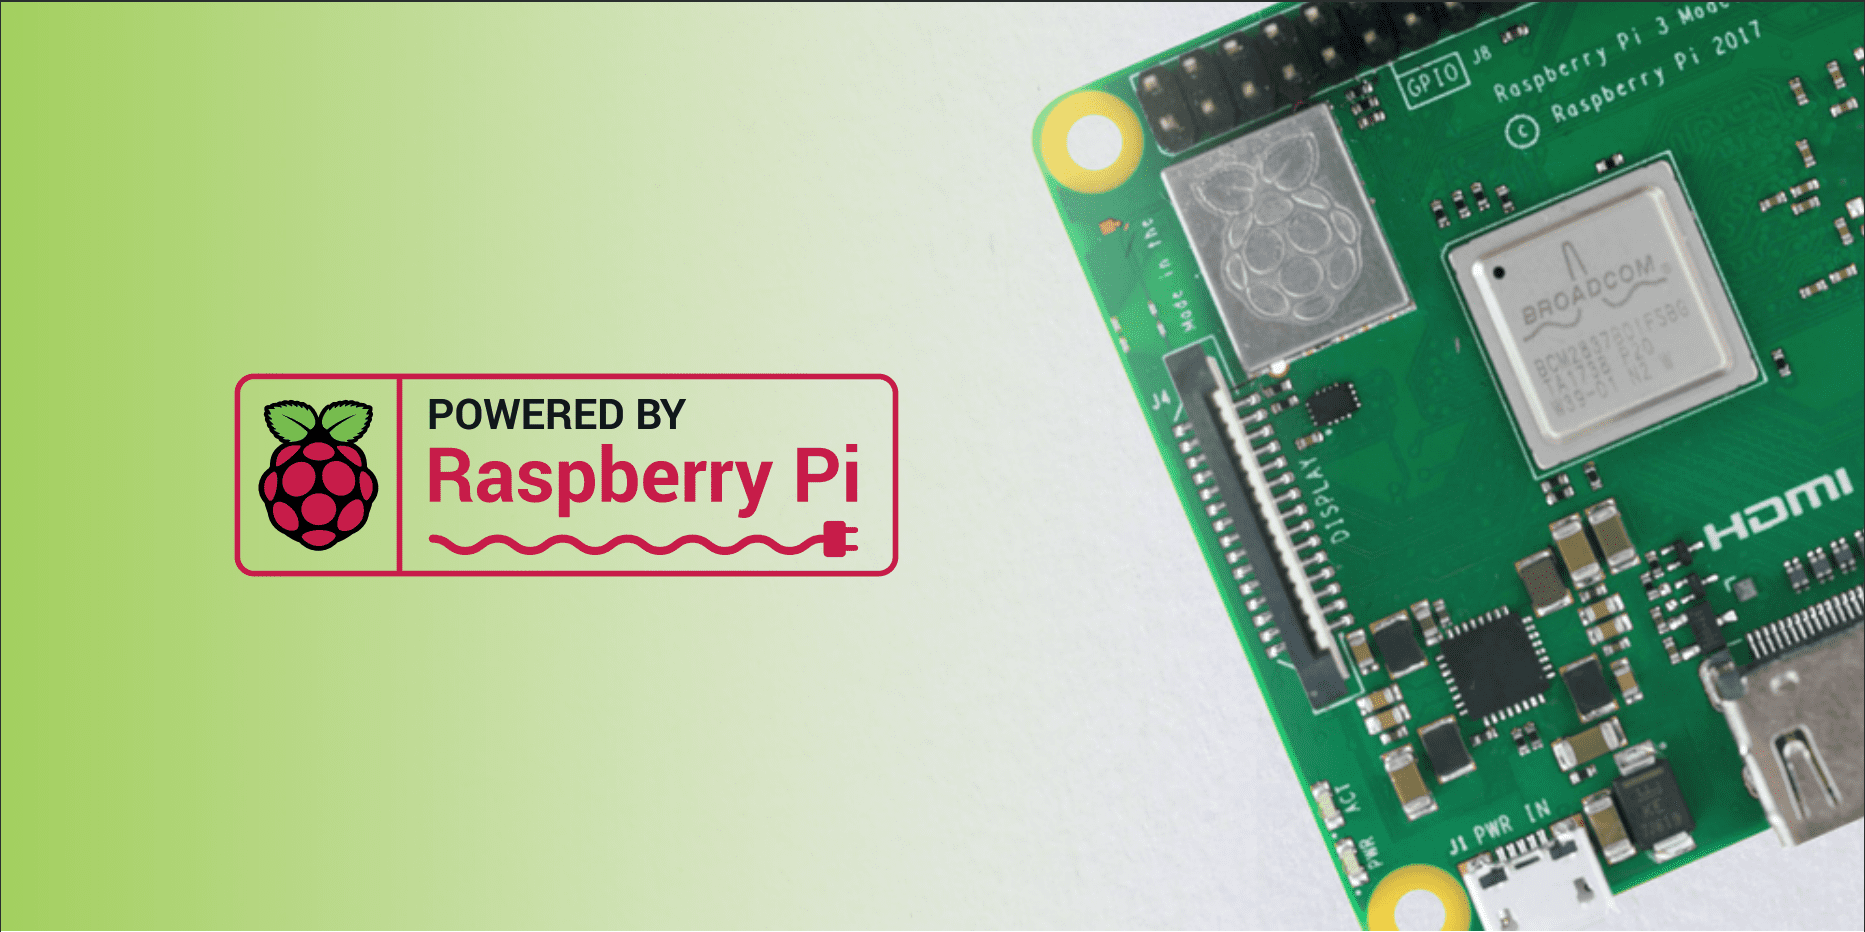 Praim Agile4Pi allows using Raspberry Pi devices as thin clients